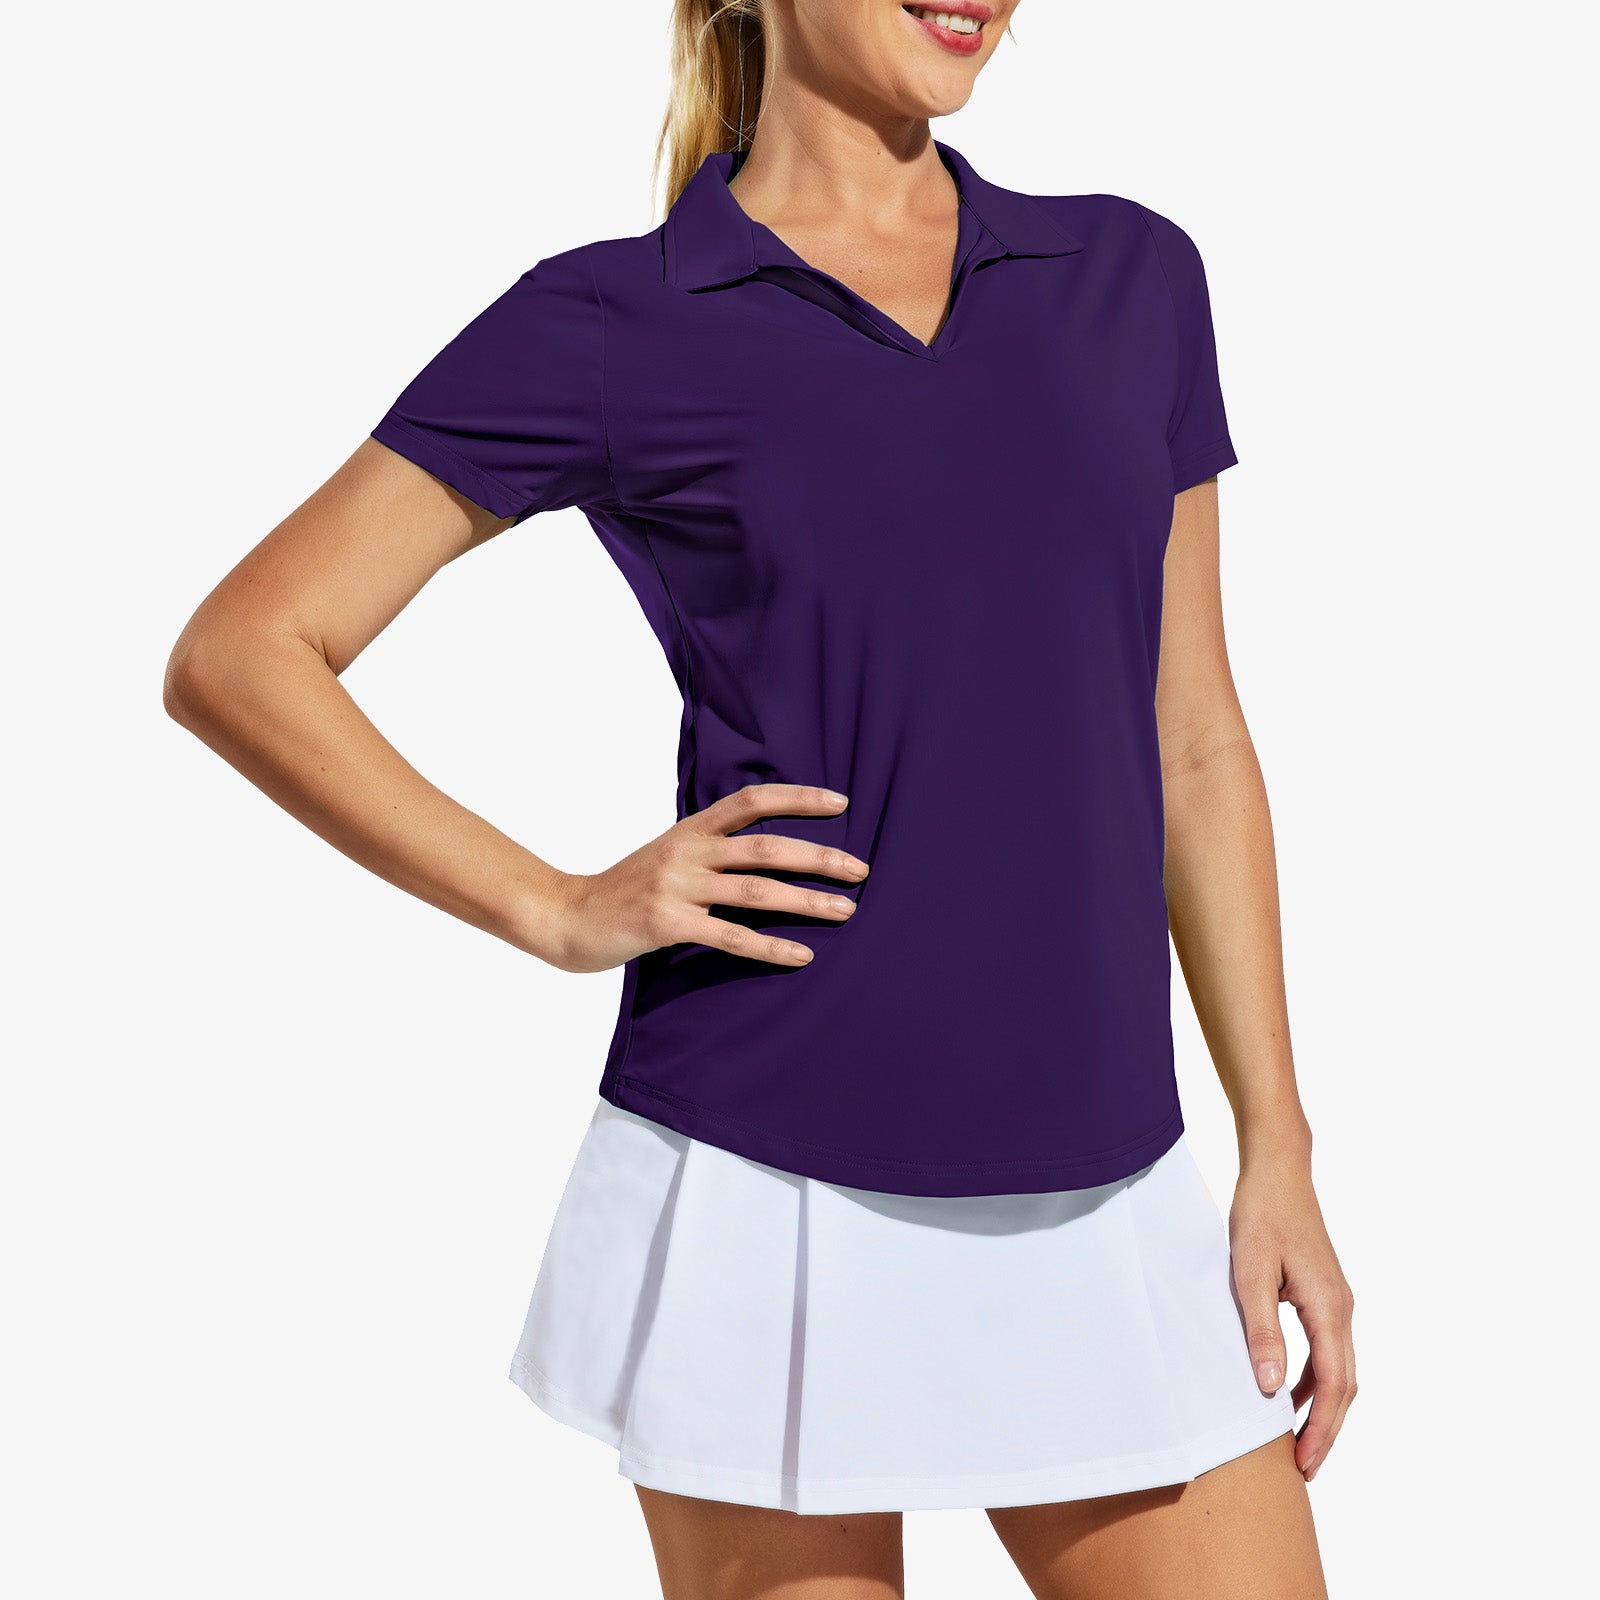 Damen-Golf-Poloshirts Kurzarm-Tennisshirt mit V-Ausschnitt und Kragen